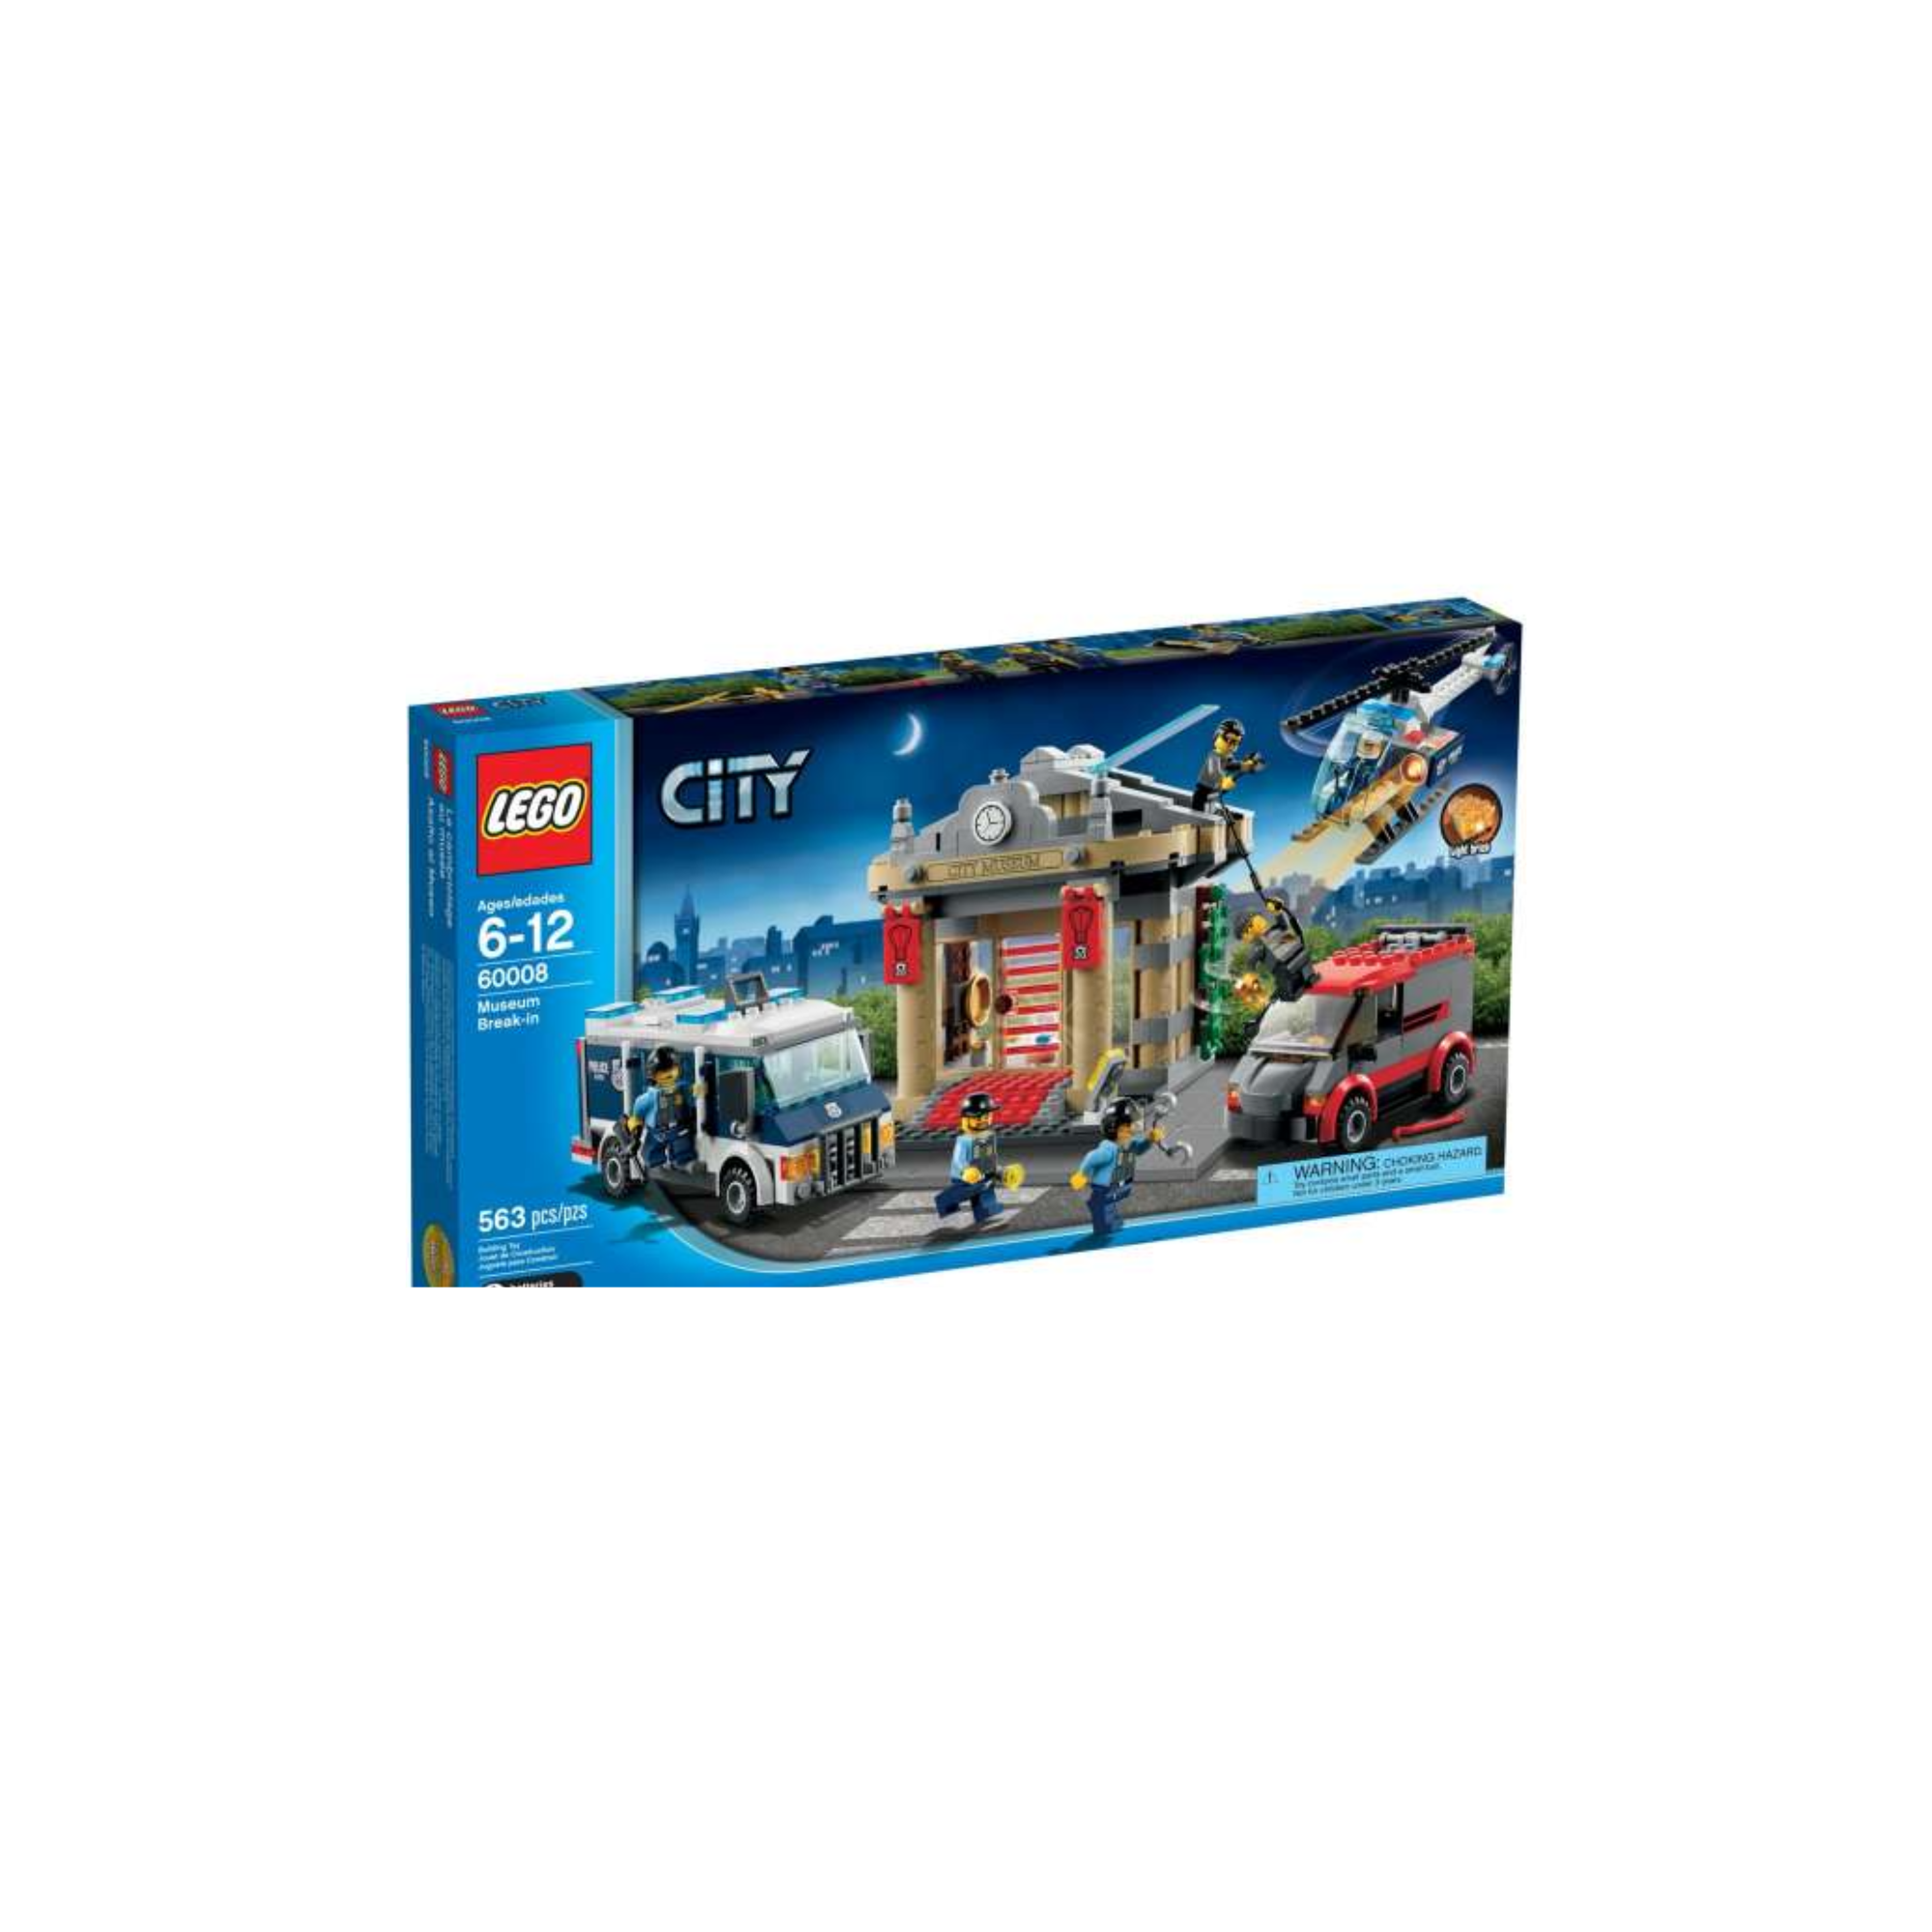 Lego City Museum Break-in